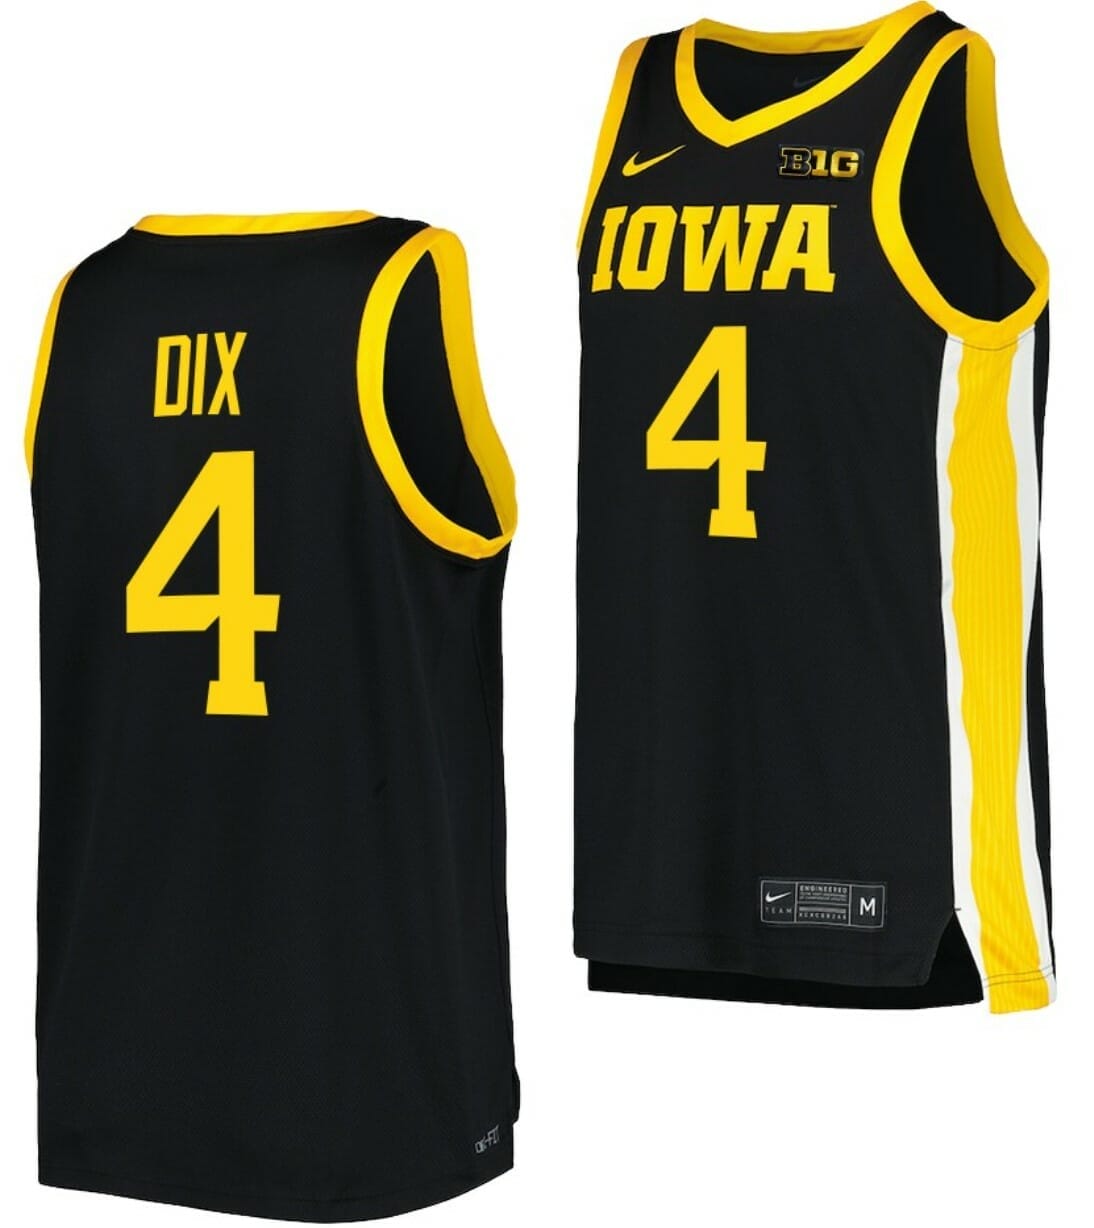 NCAA Basketball Jersey Josh Dix Iowa Hawkeyes College Black #4